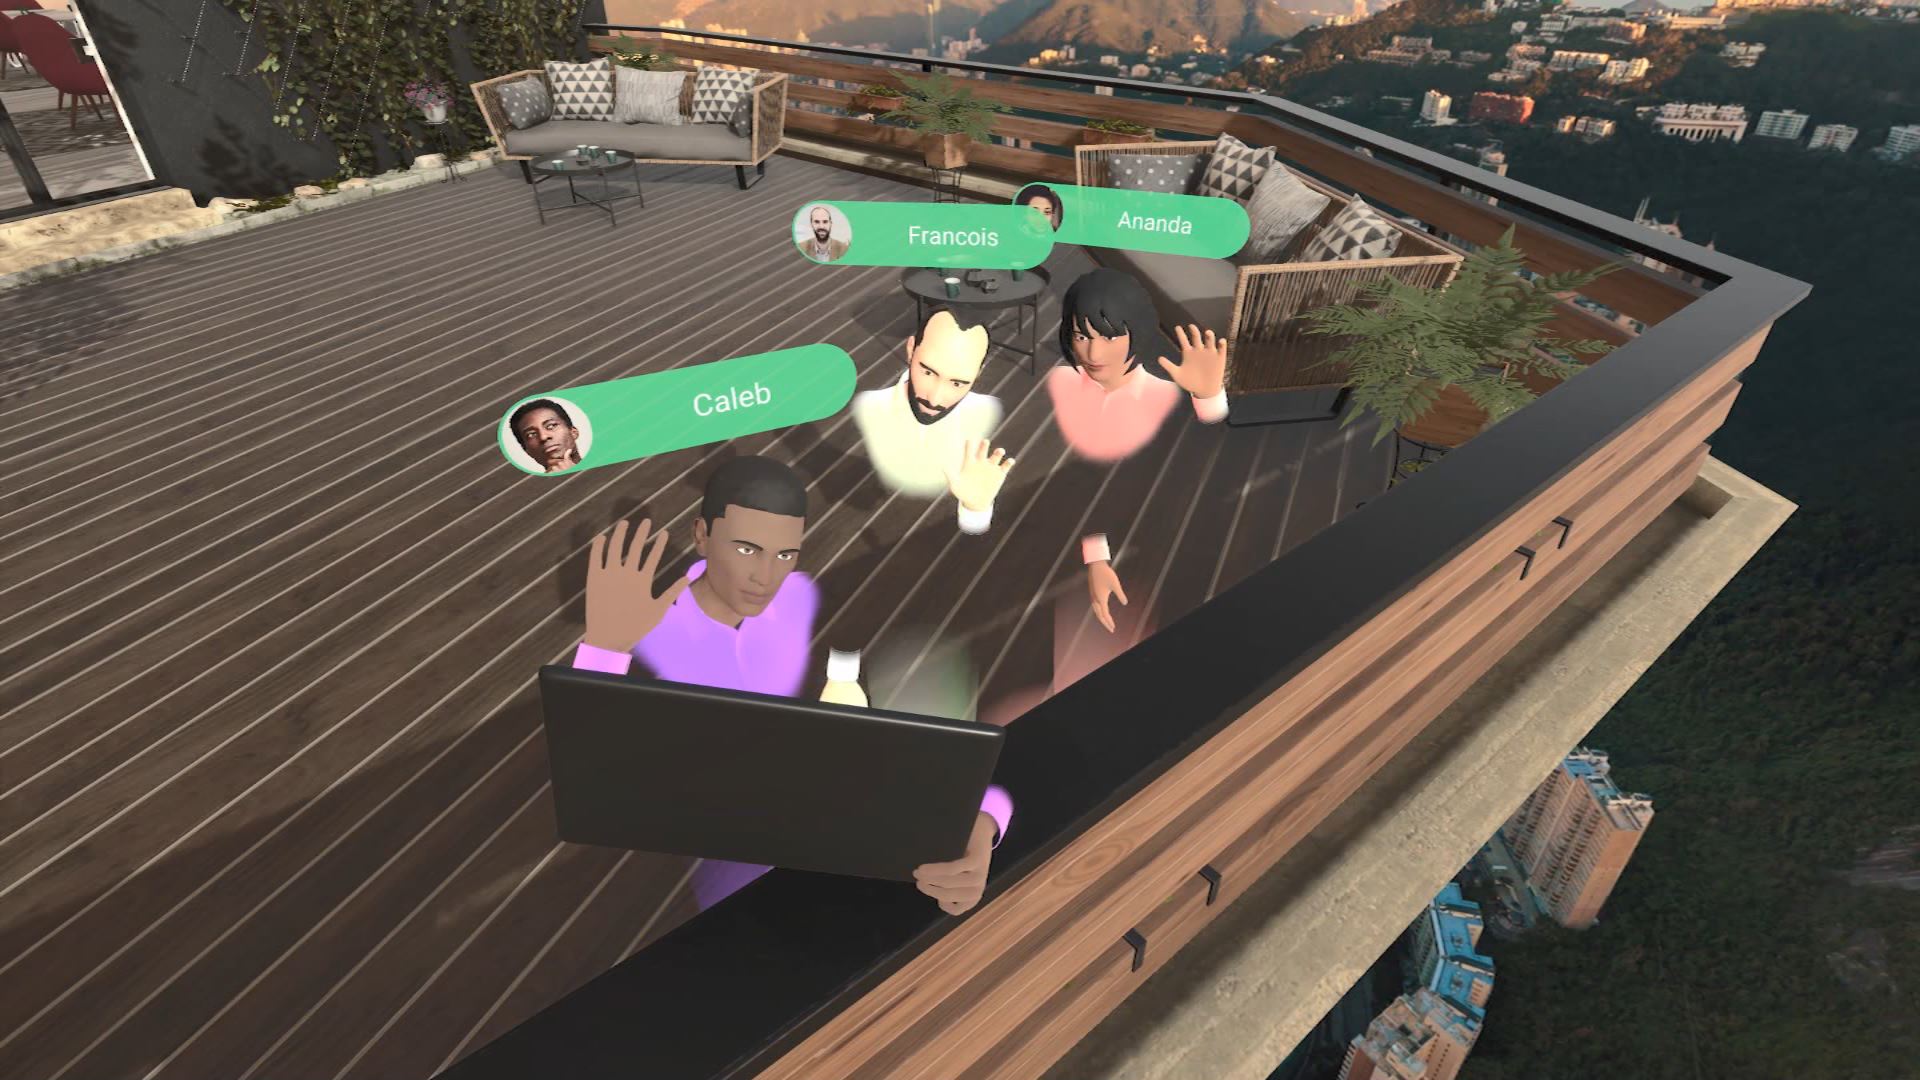 Social VR meeting